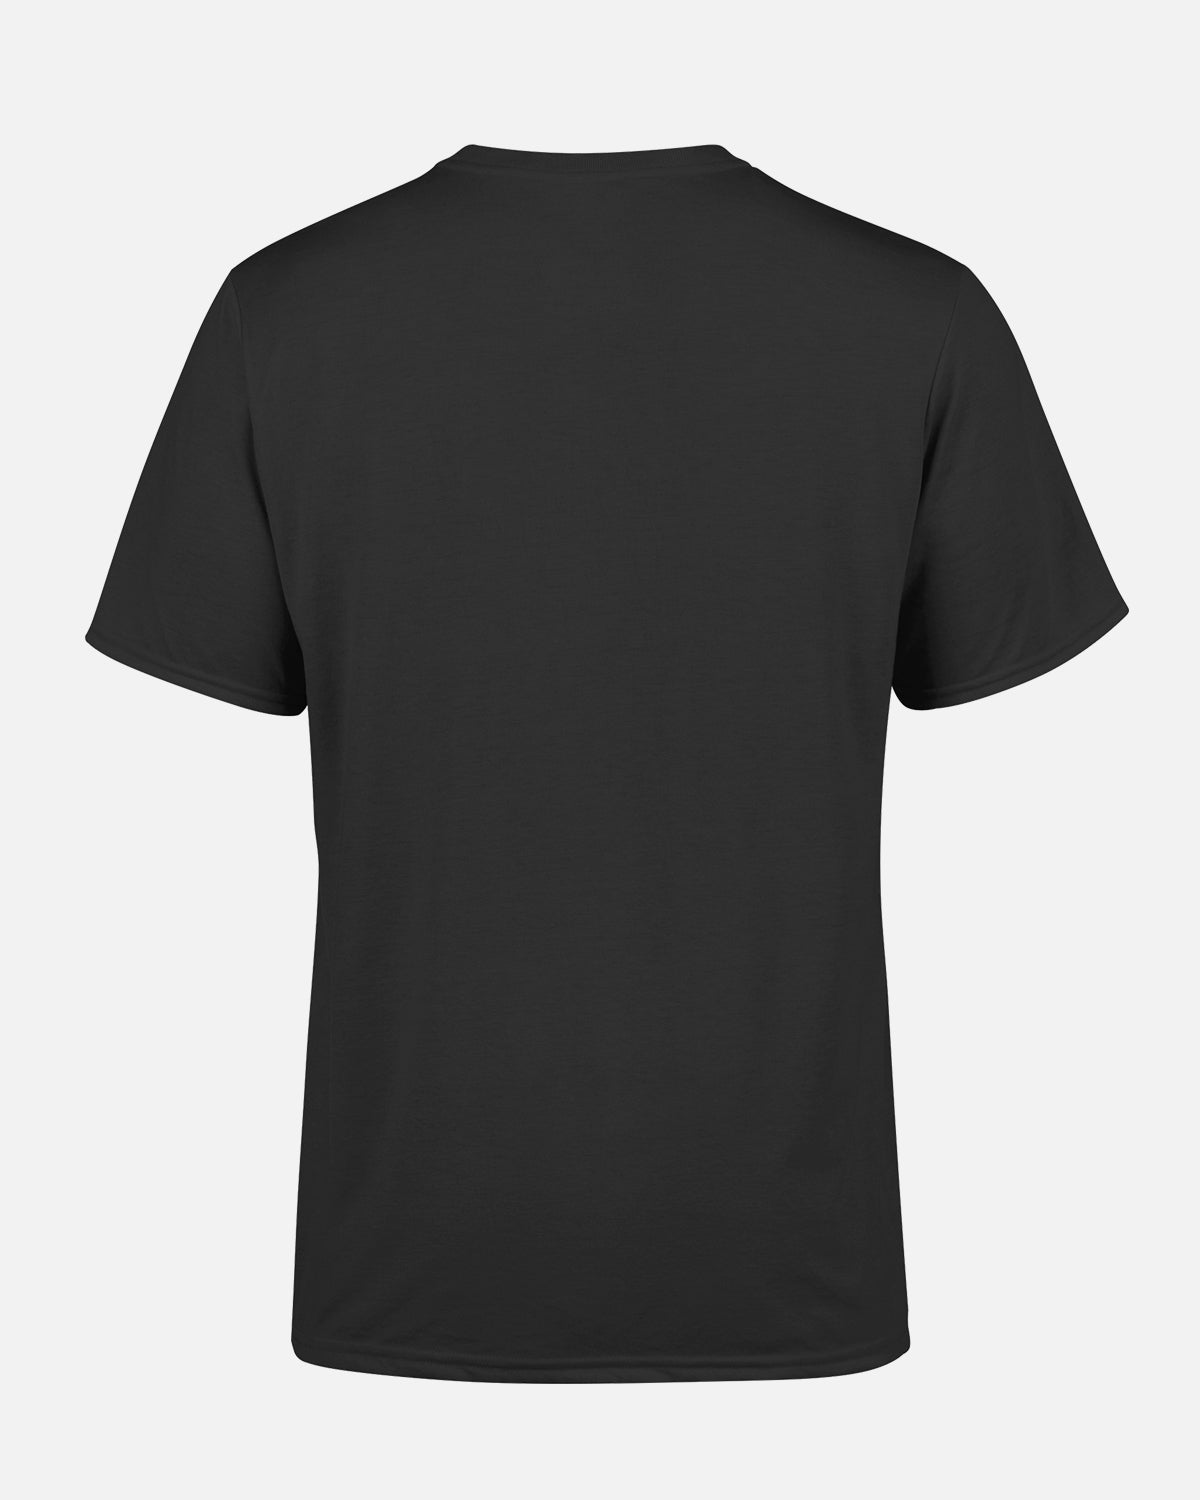 NFFC Black EST 1865 T-Shirt